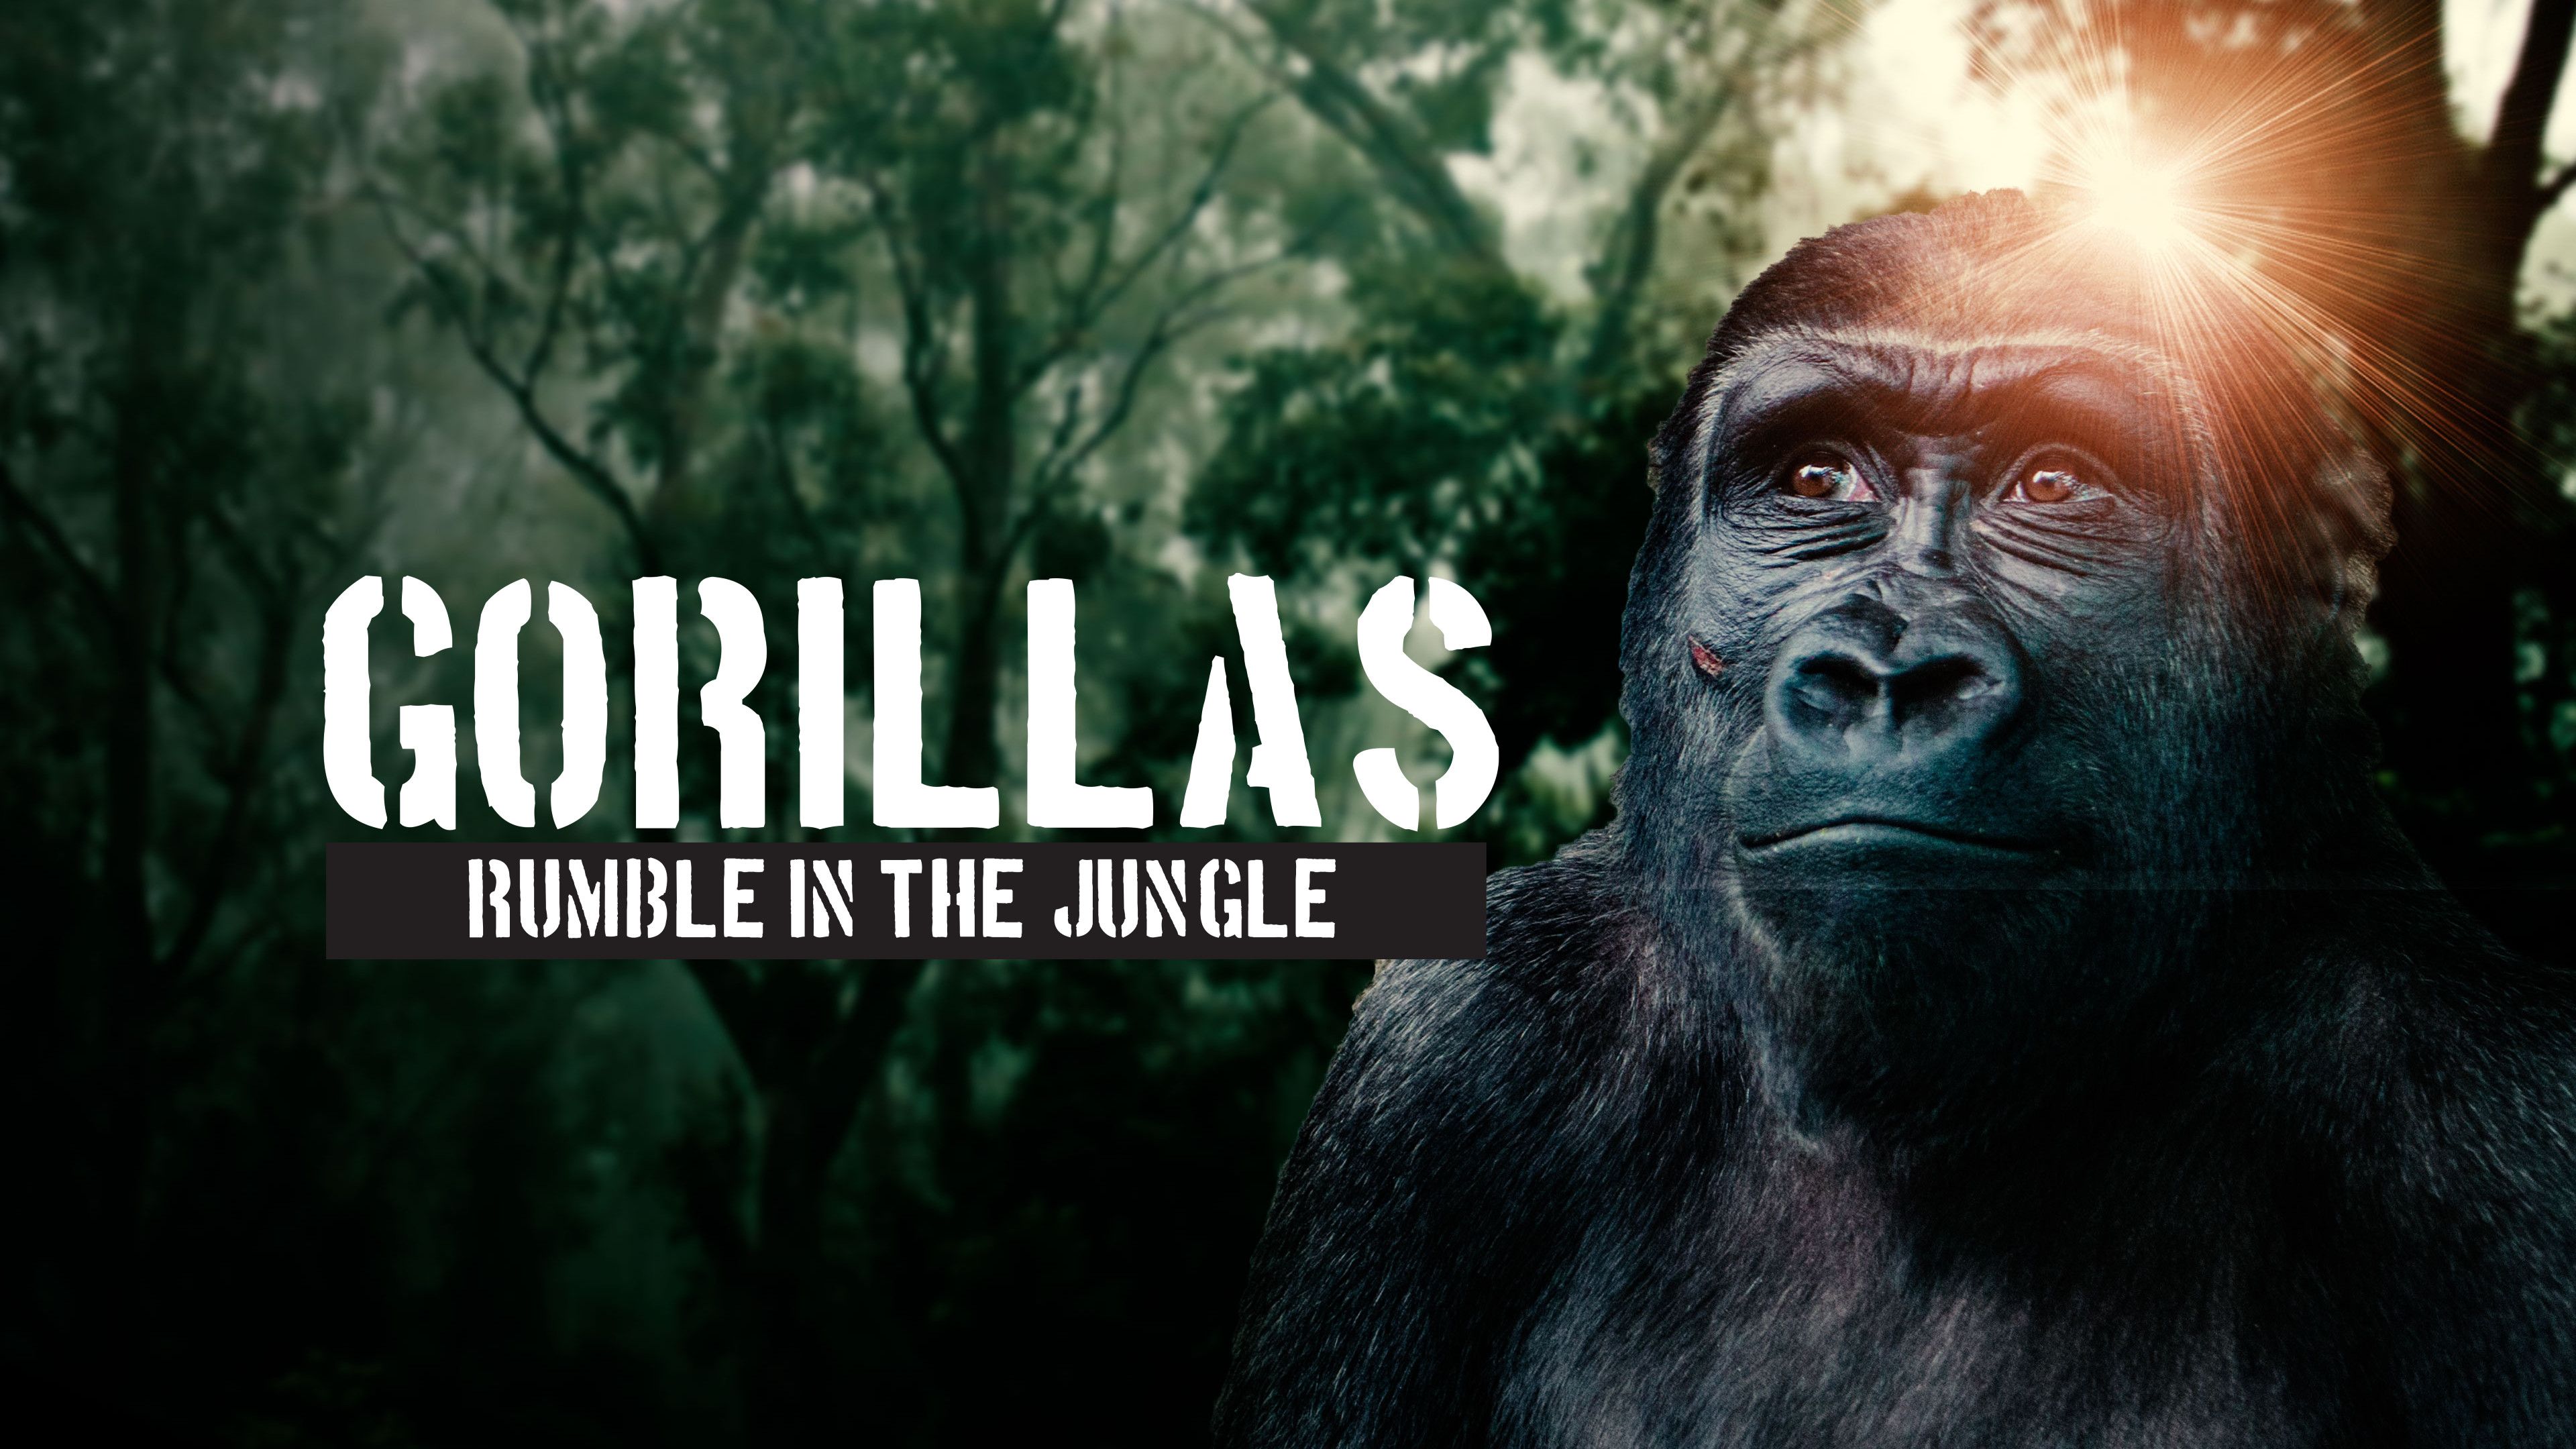 Gorillas Rumble In The Jungle